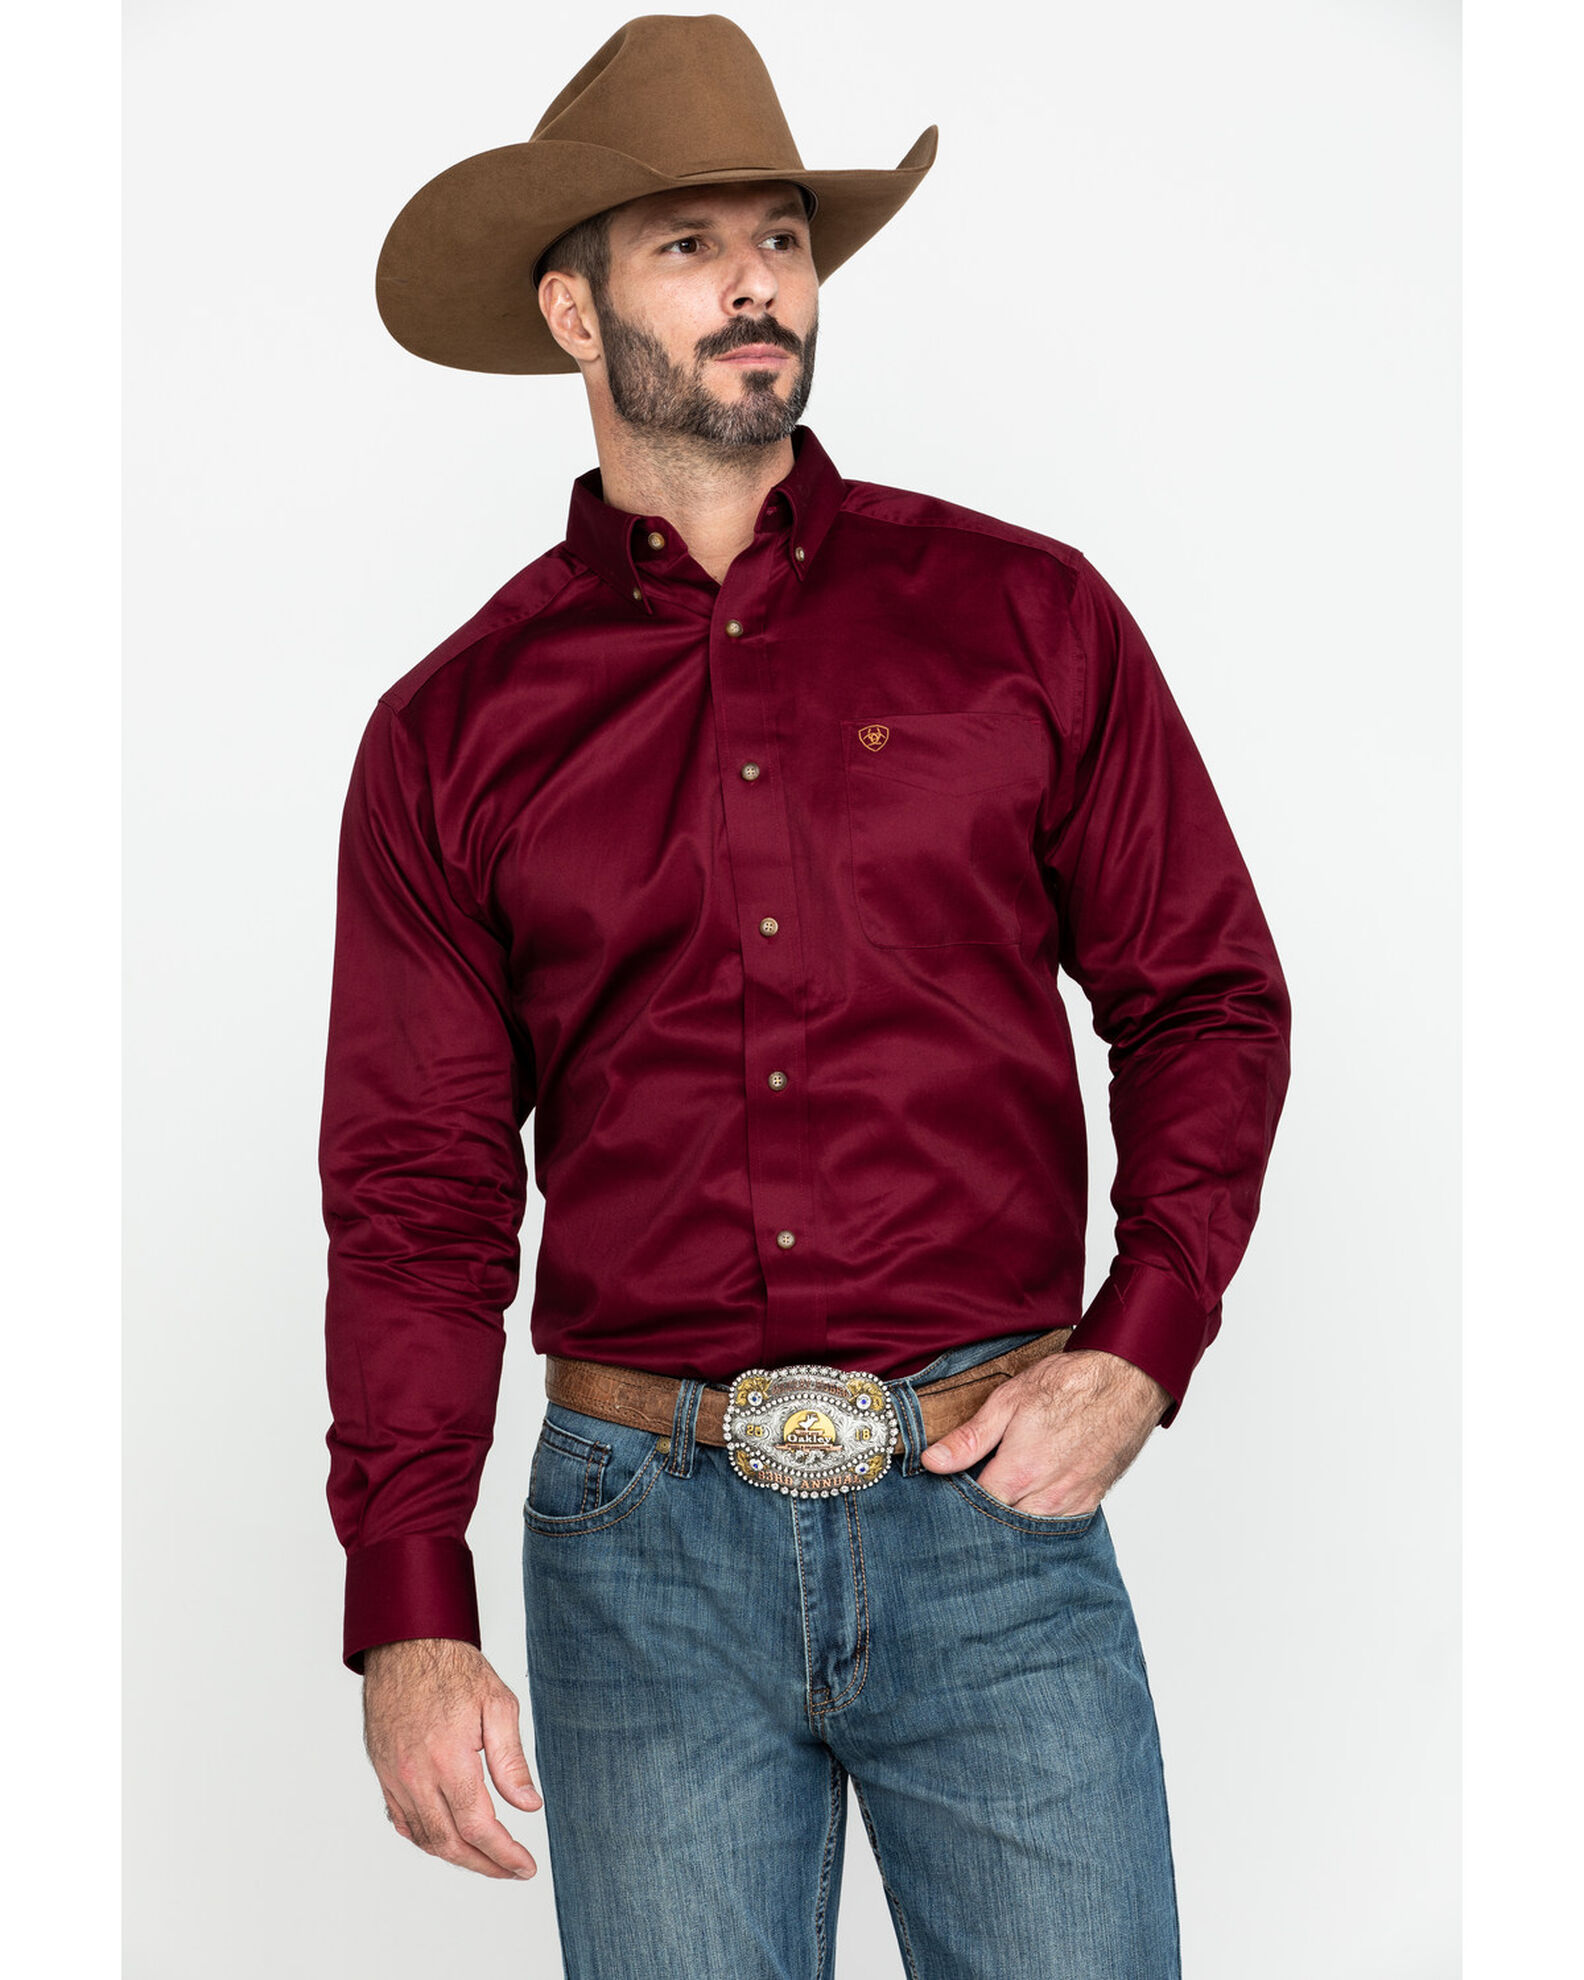 Ariat Men's Burgundy Solid Twill Long Sleeve Western Shirt